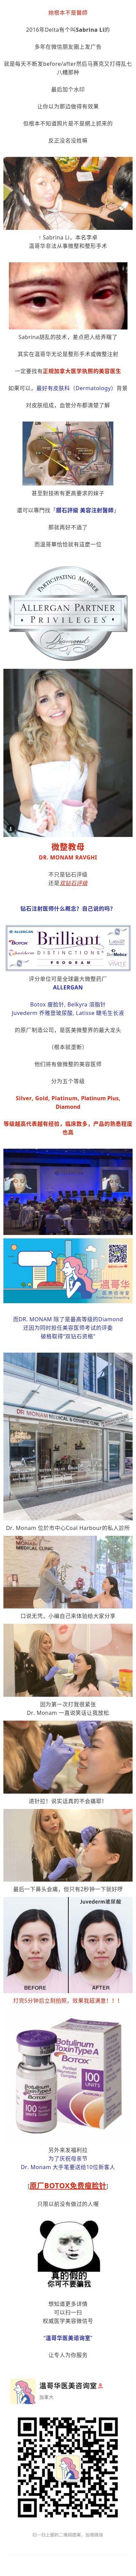 Chobee WeChat Advertorial